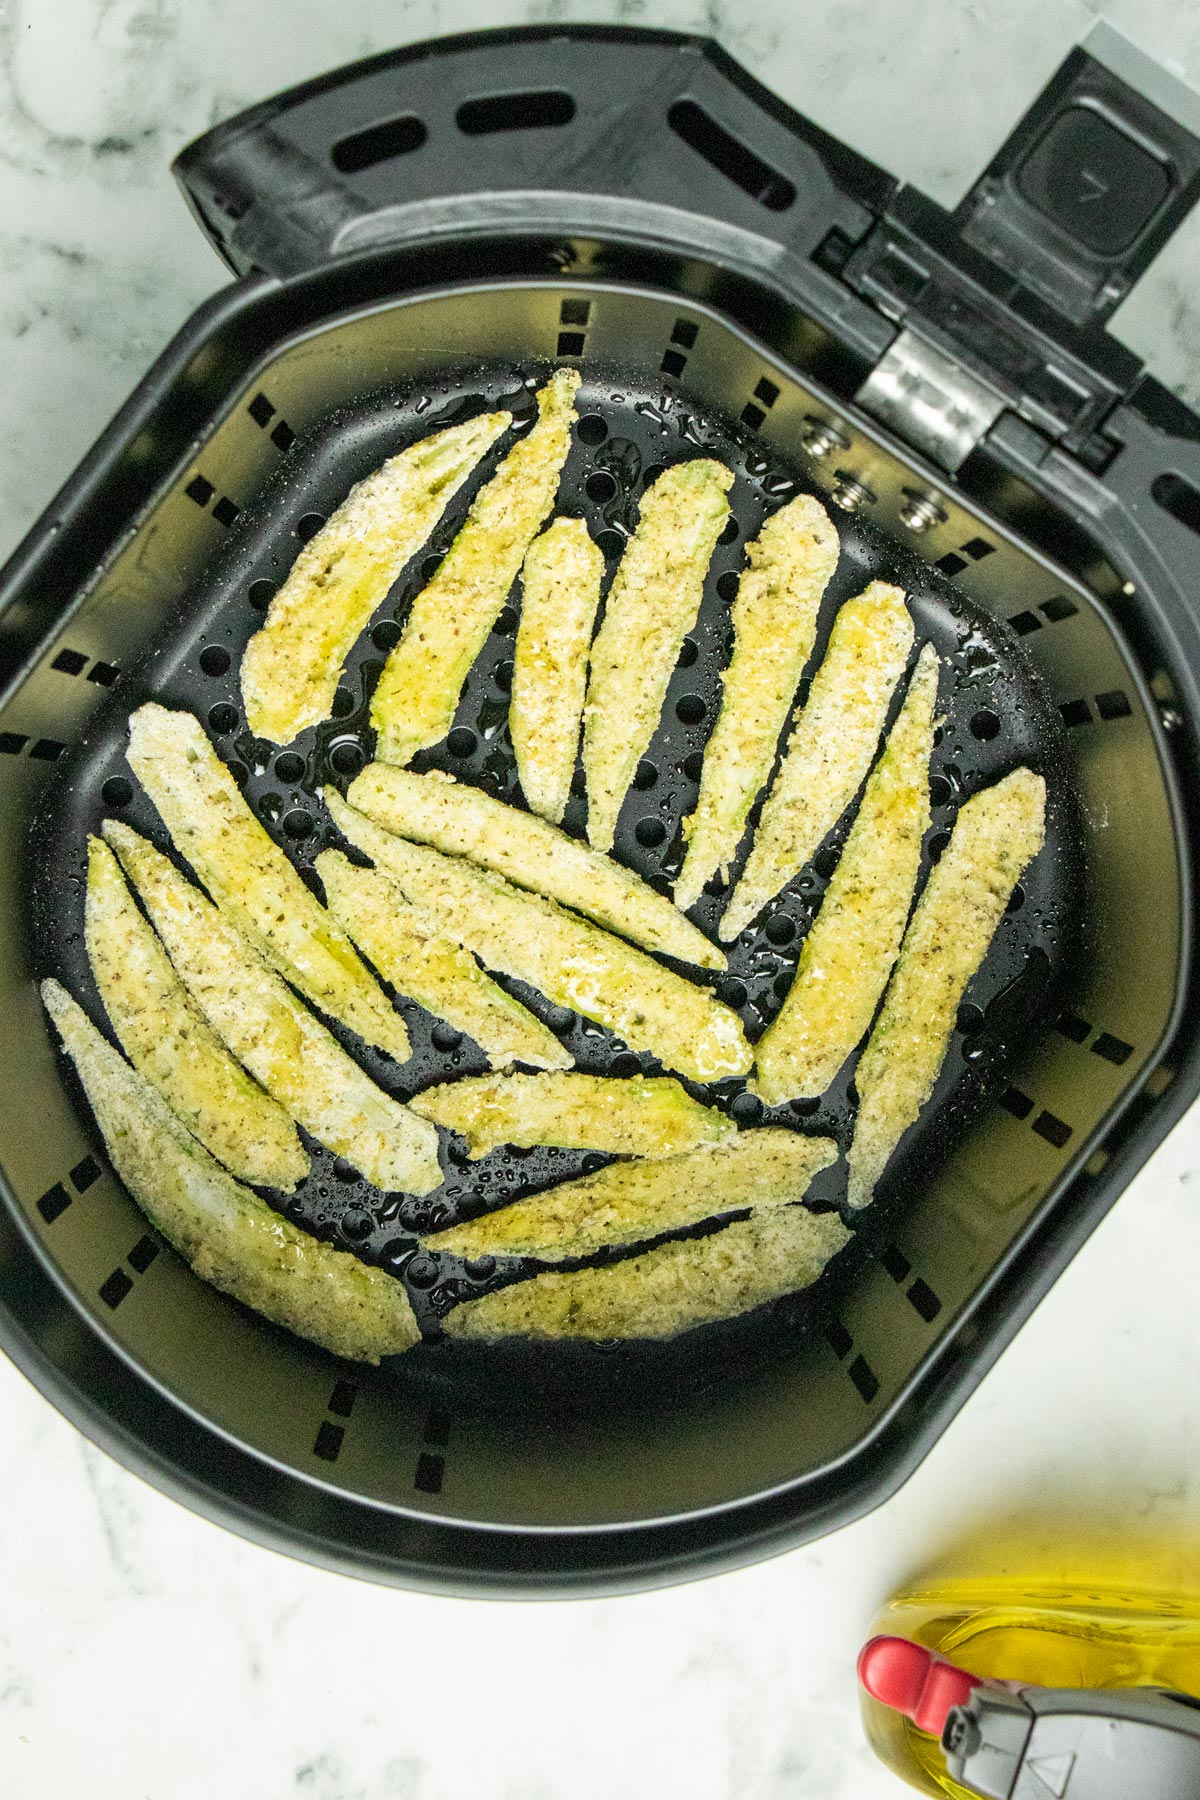 uncooked okra in the air fryer basket